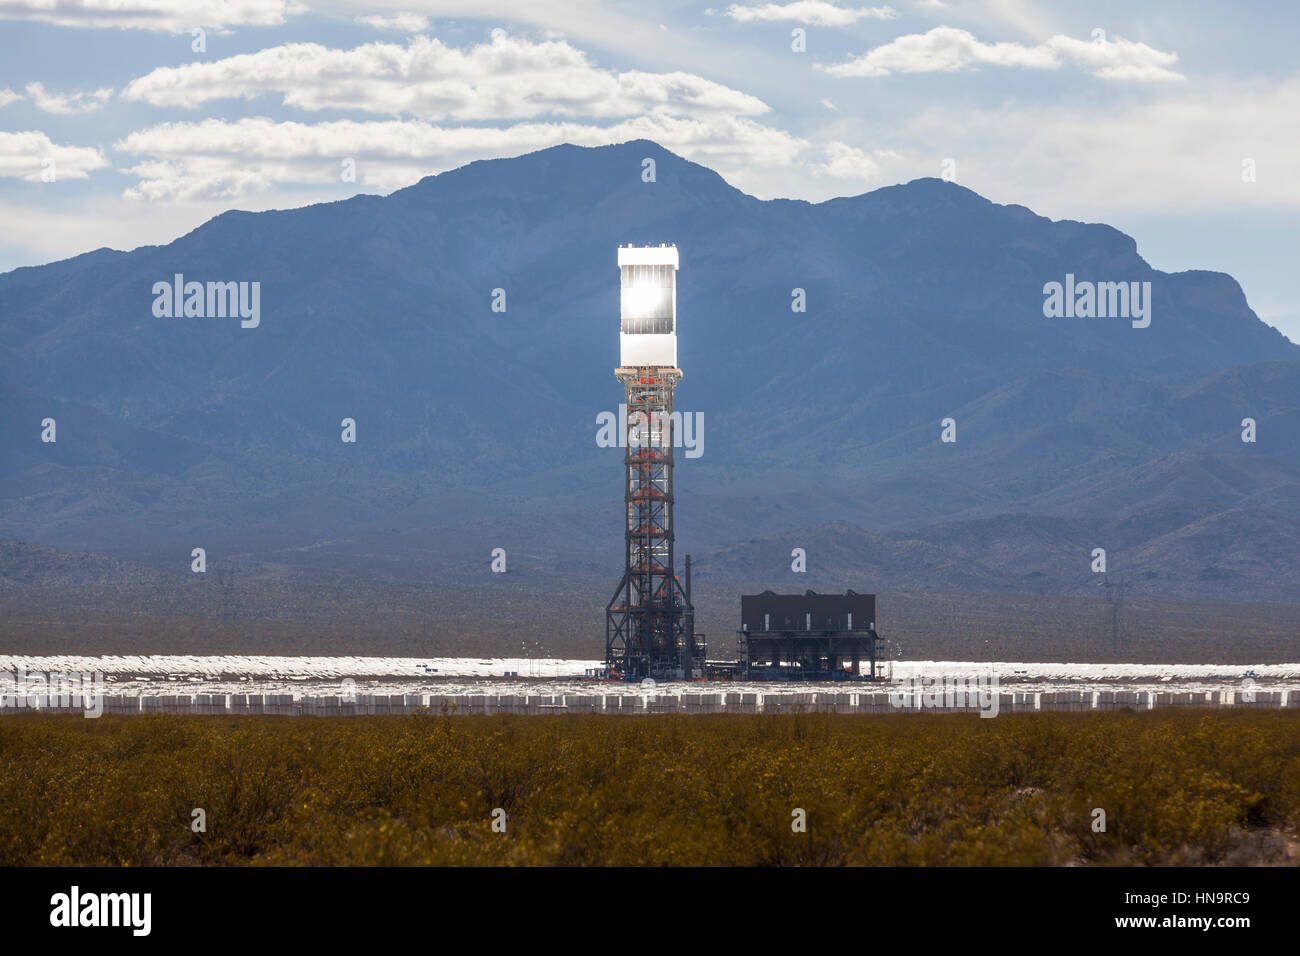 Editorial photo of the massive newly operational 392 megawatt Ivanpah solar thermal power plant in California's Mojave desert. Stock Photo